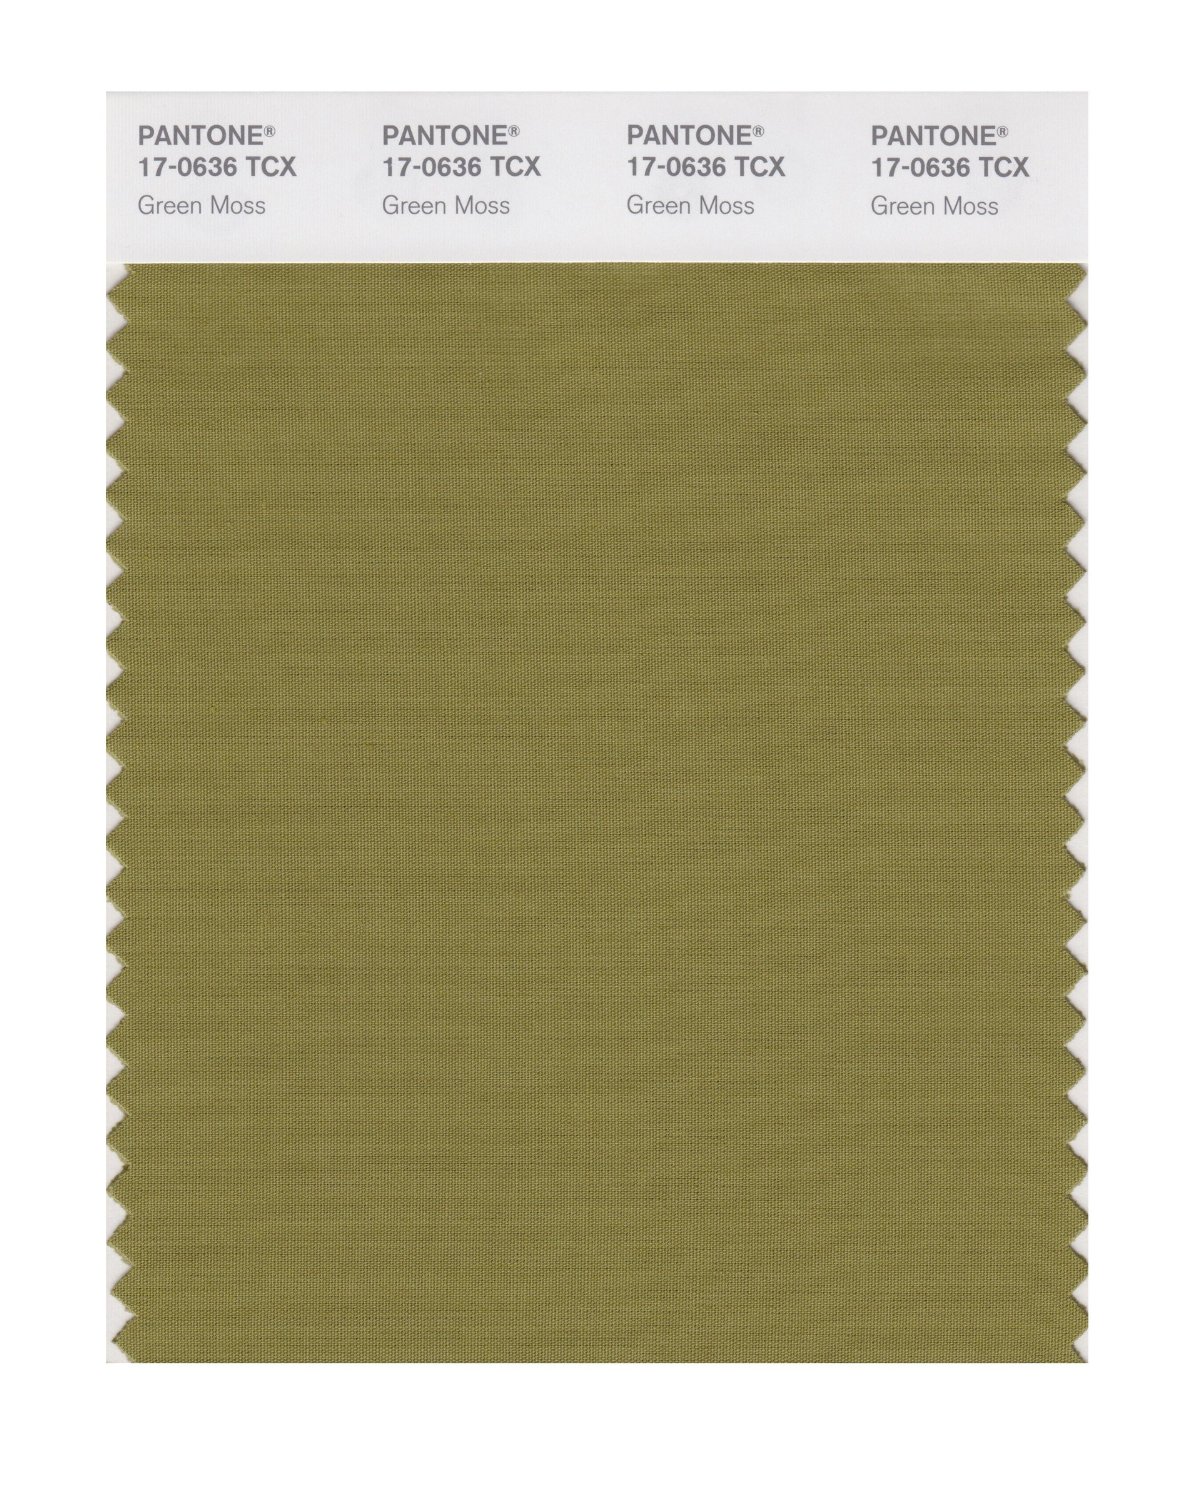 Pantone Cotton Swatch 17-0636 Green Moss